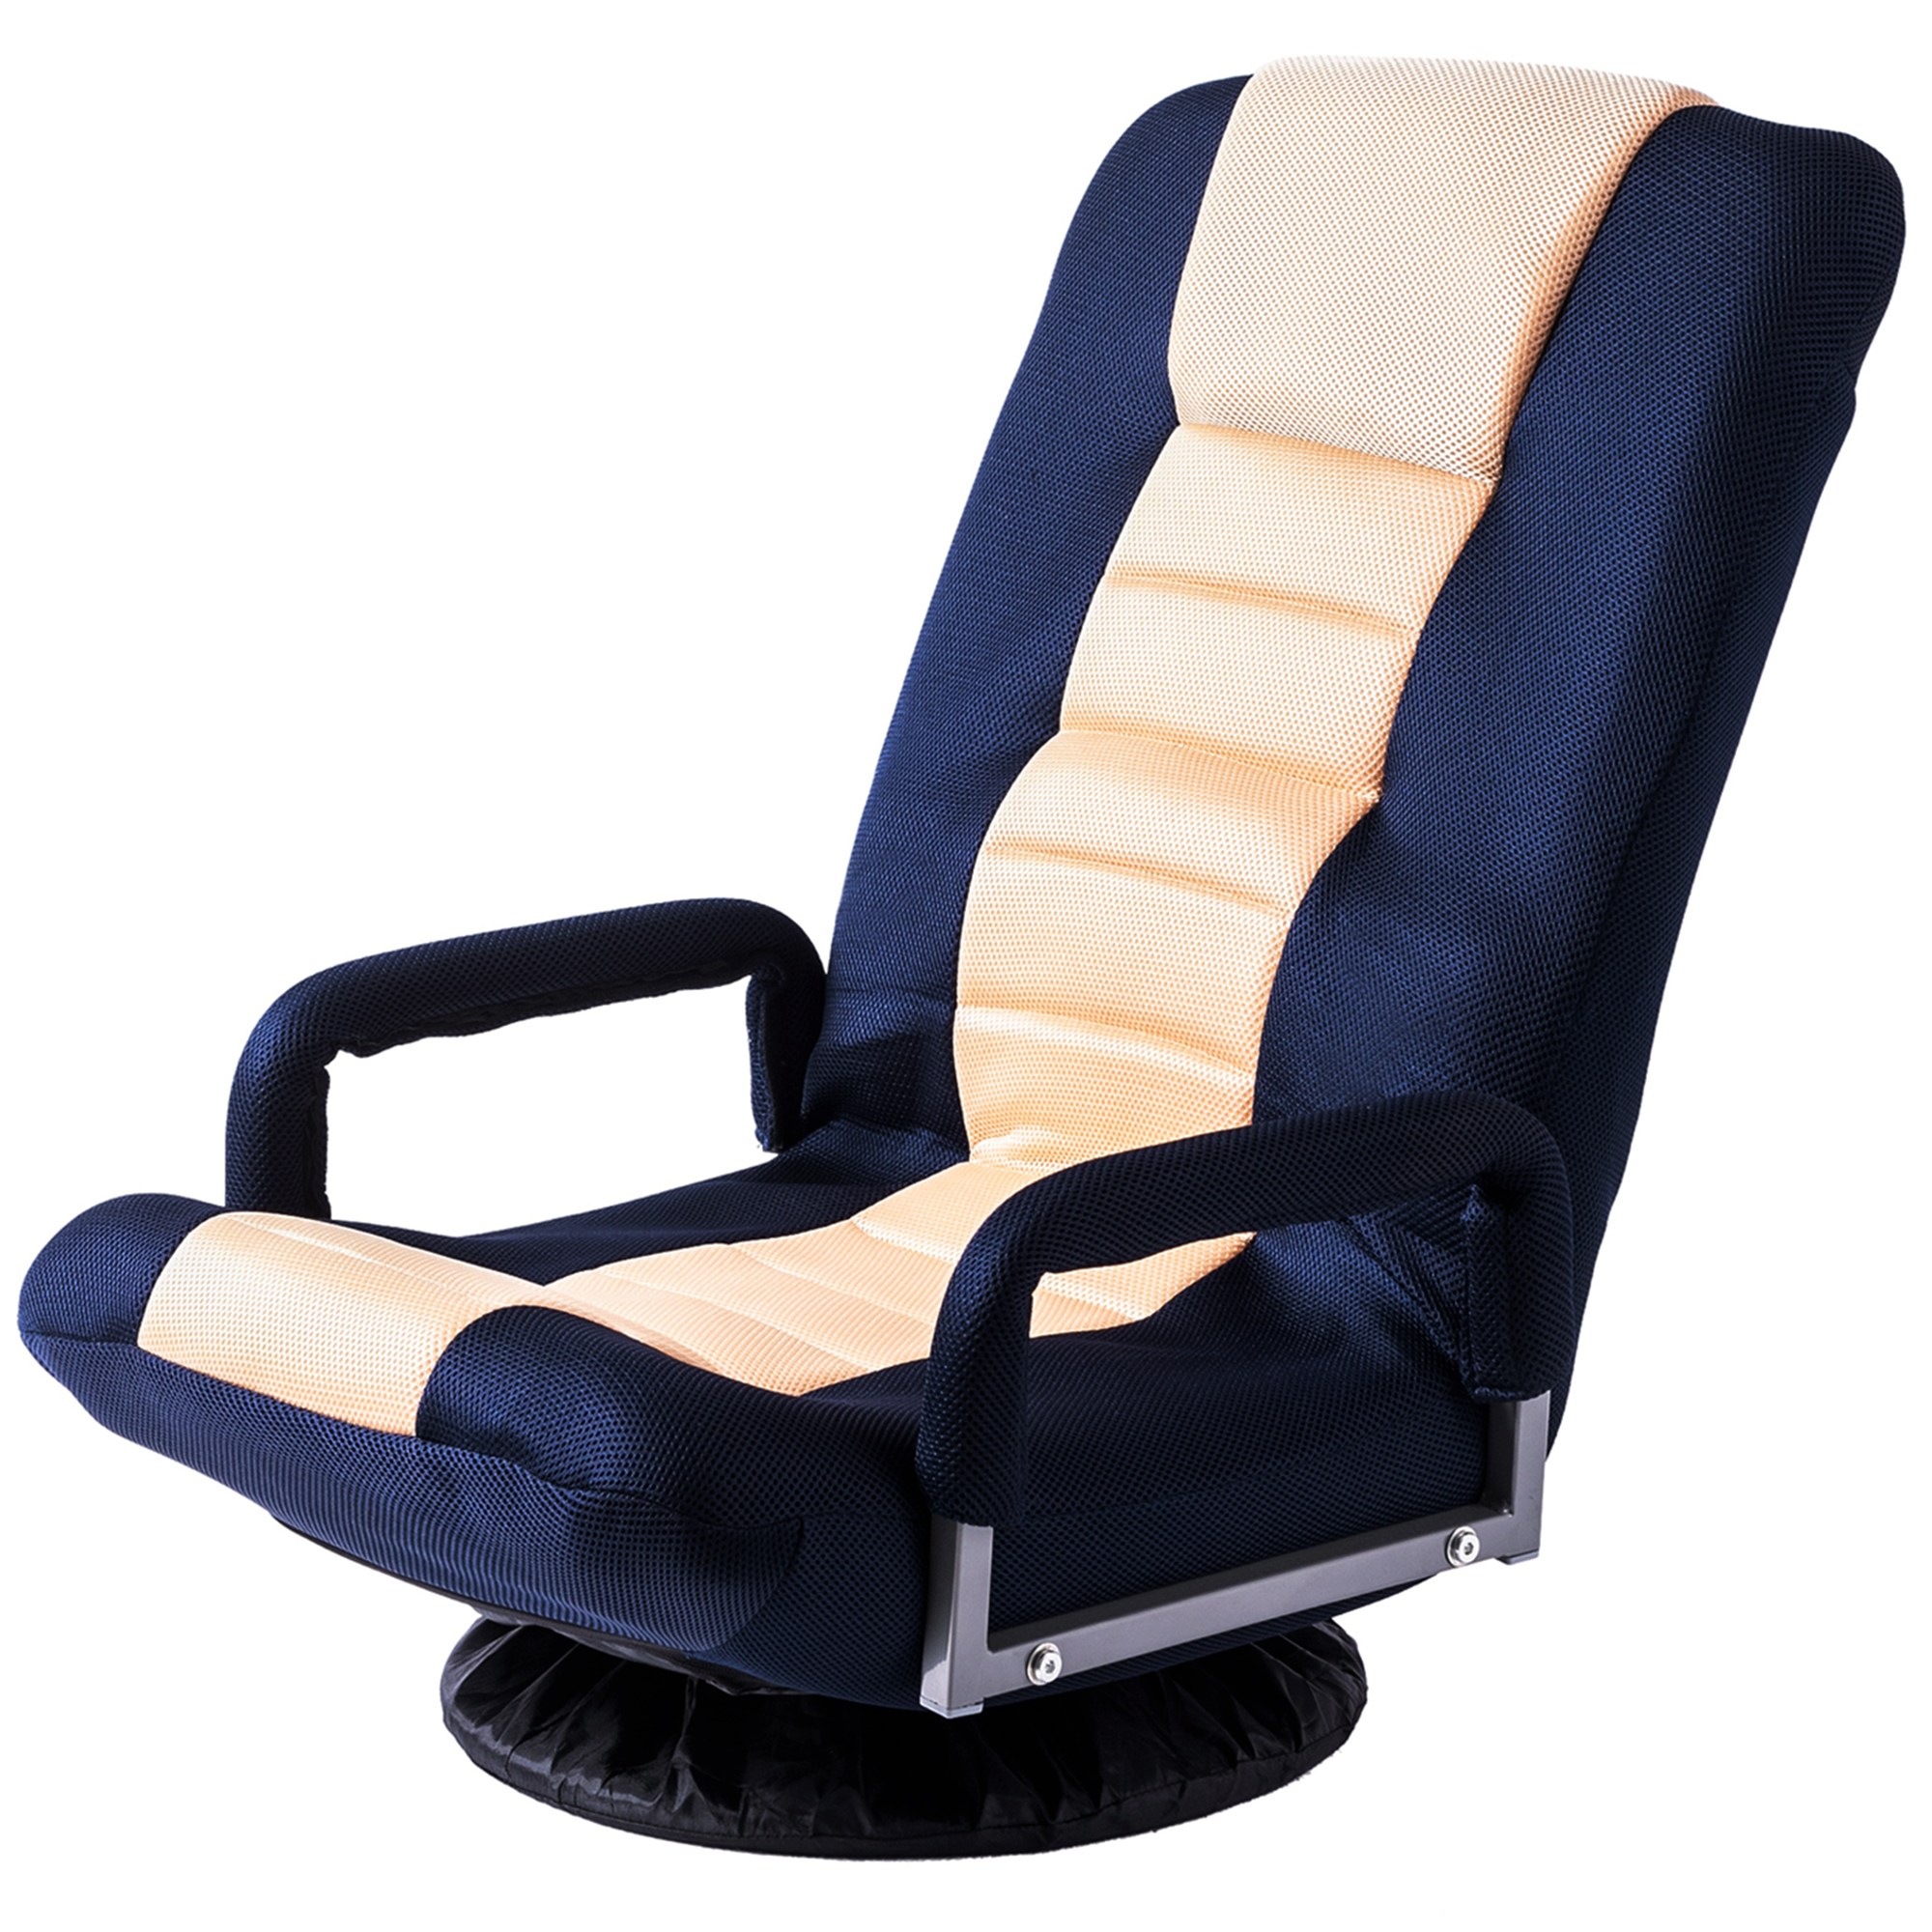 Swivel Video Rocker Gaming Chair Adjustable 7-Position Floor Chair Folding Sofa Lounger,Blue+Beige-Boyel Living